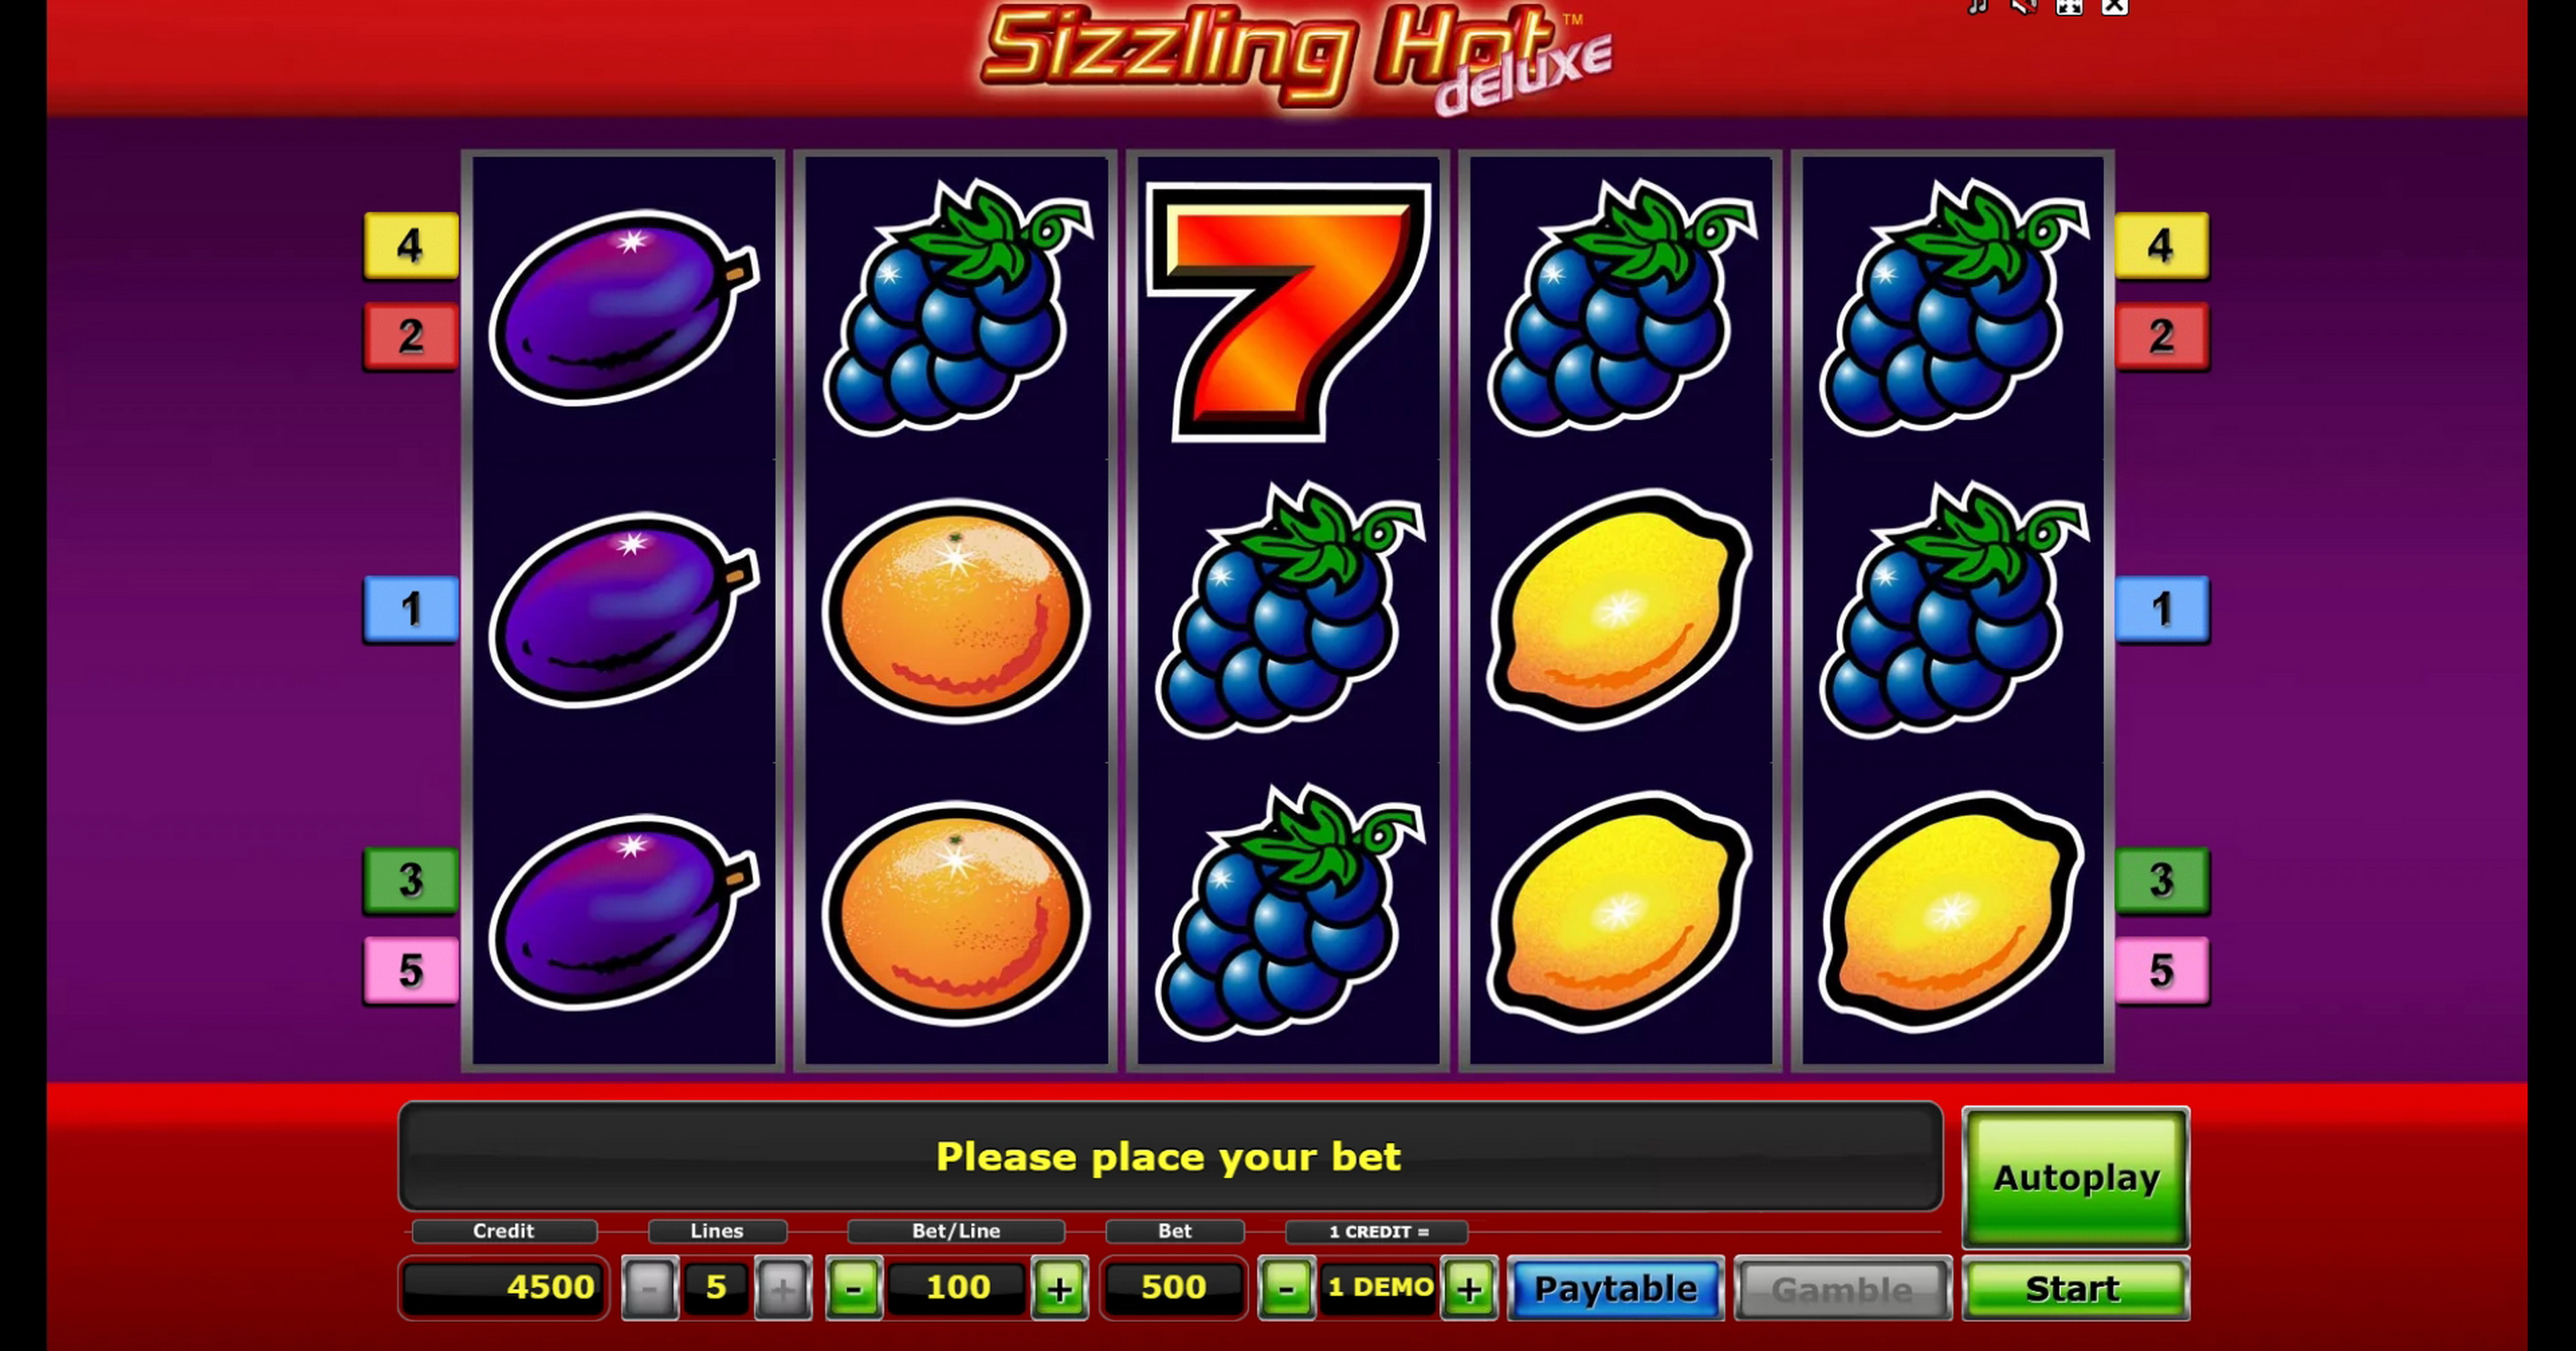 Sizzling hot slot machine free play